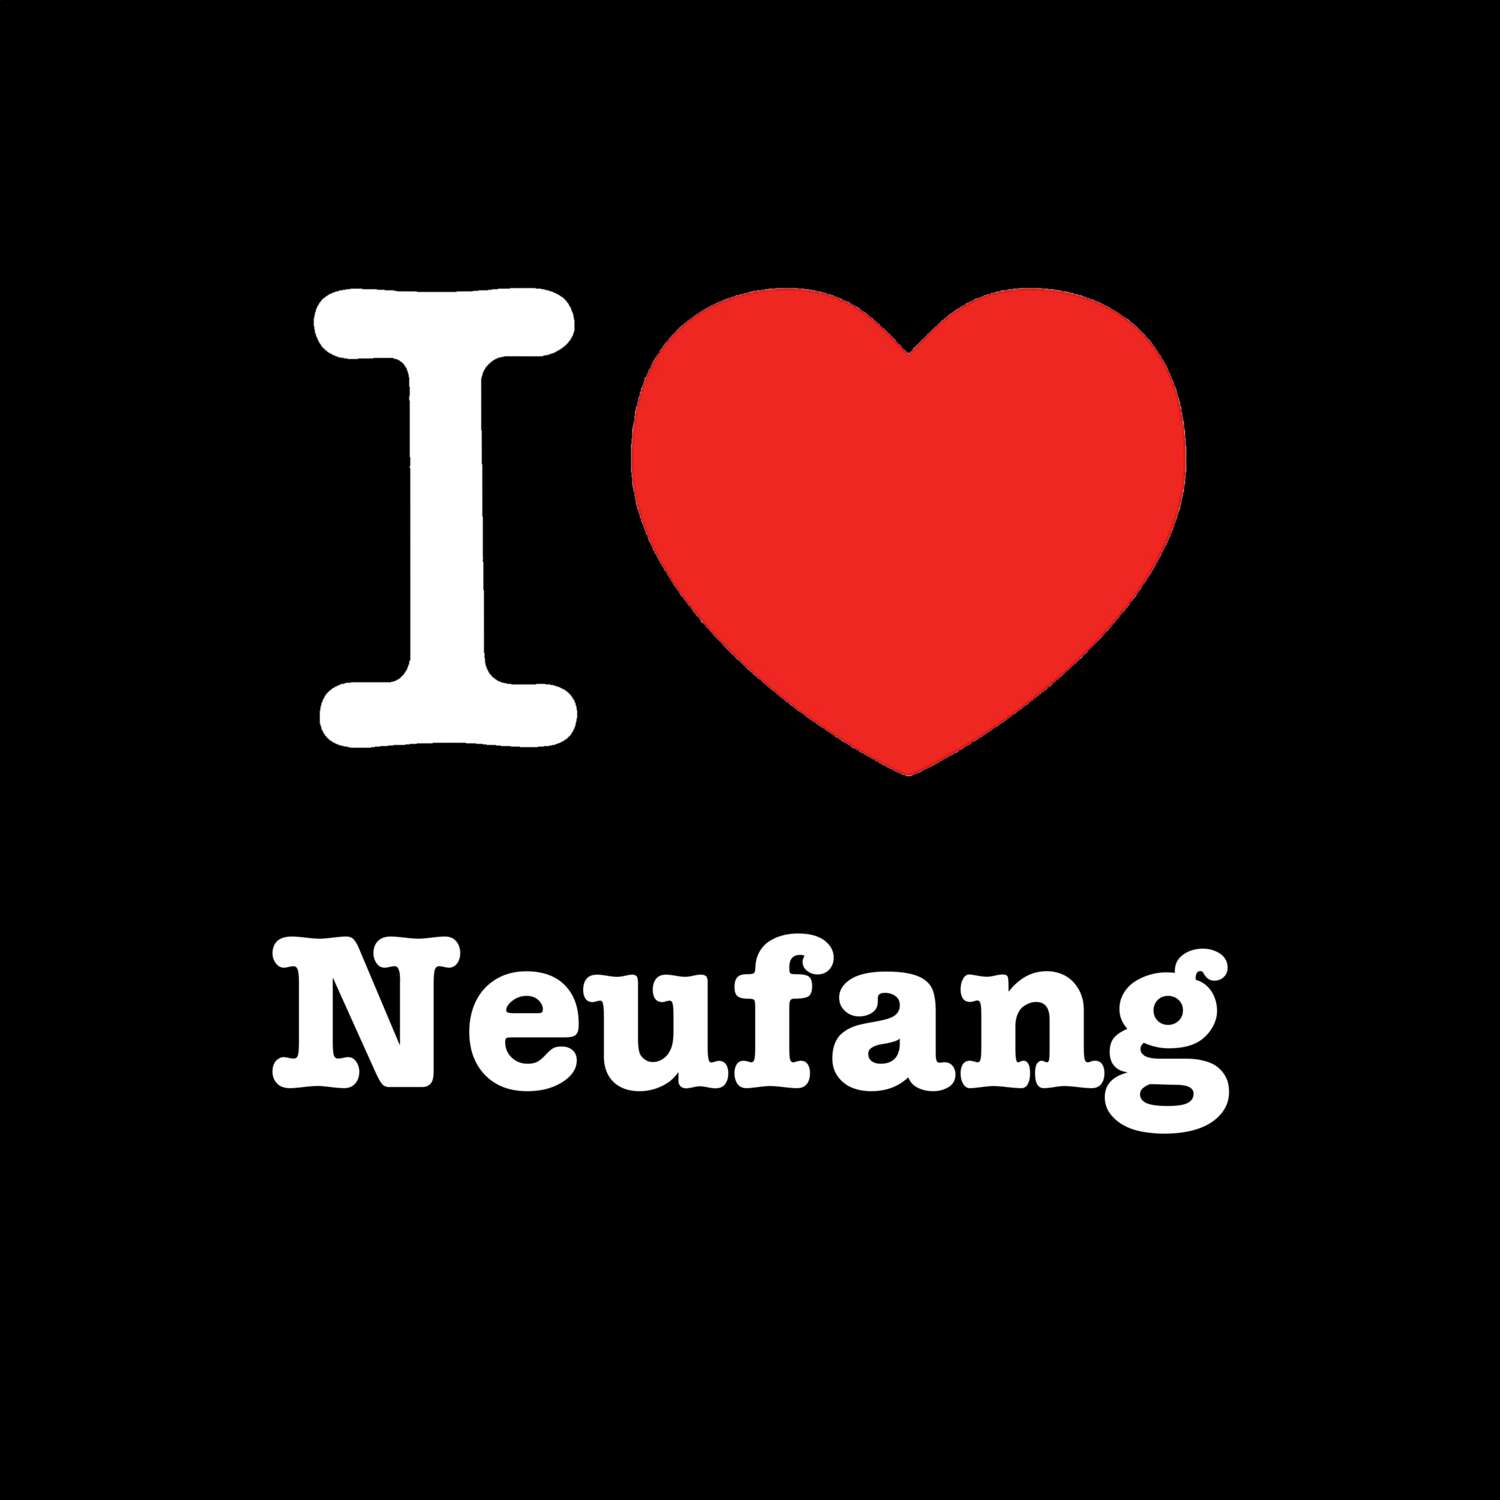 Neufang T-Shirt »I love«